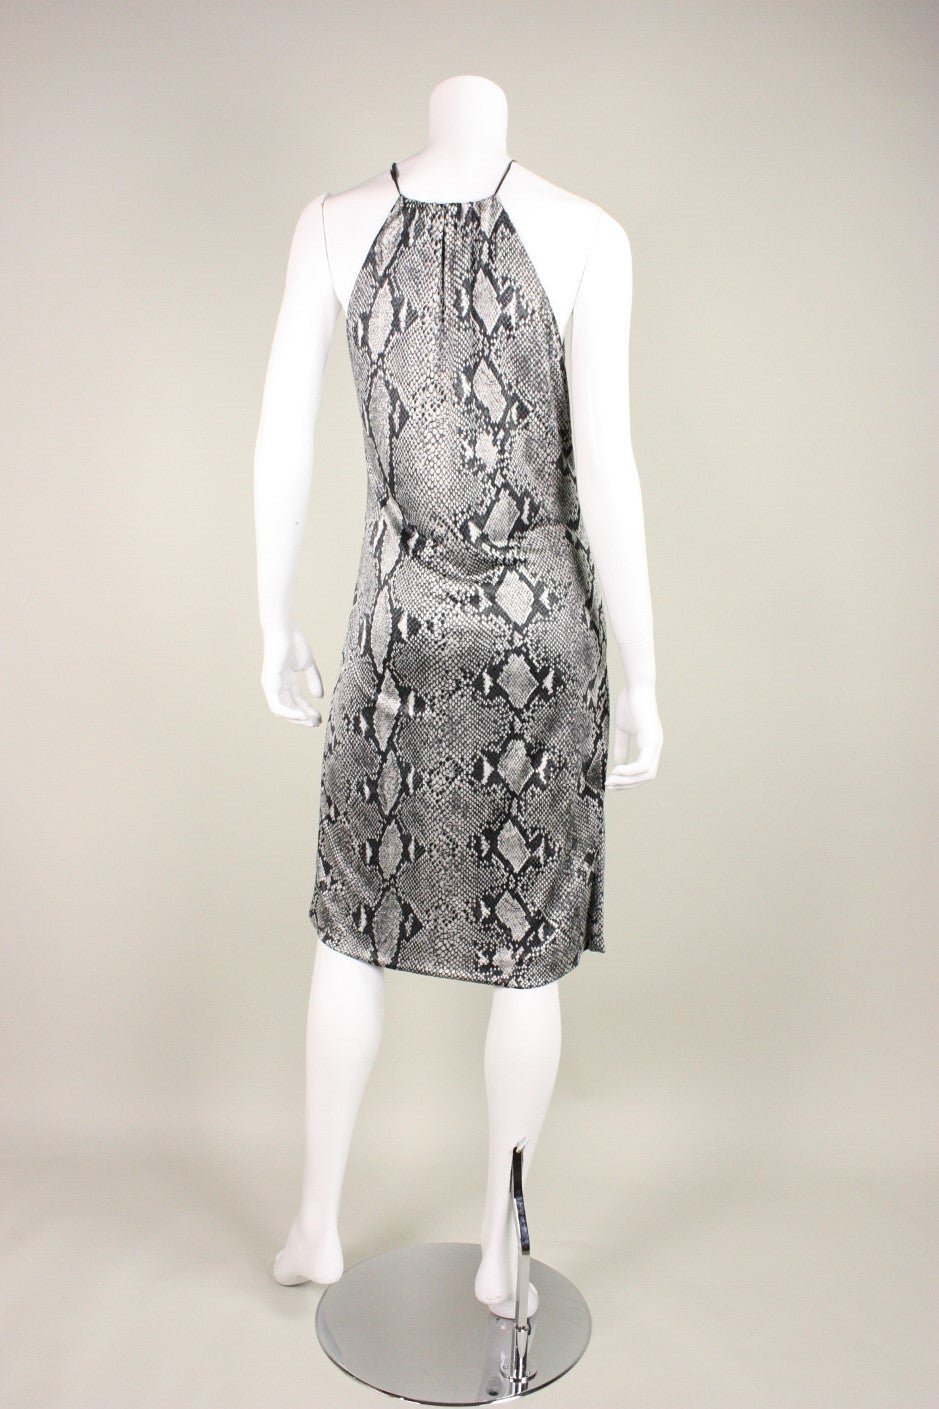 Women's Tom Ford for Gucci Snakeskin Print Dress